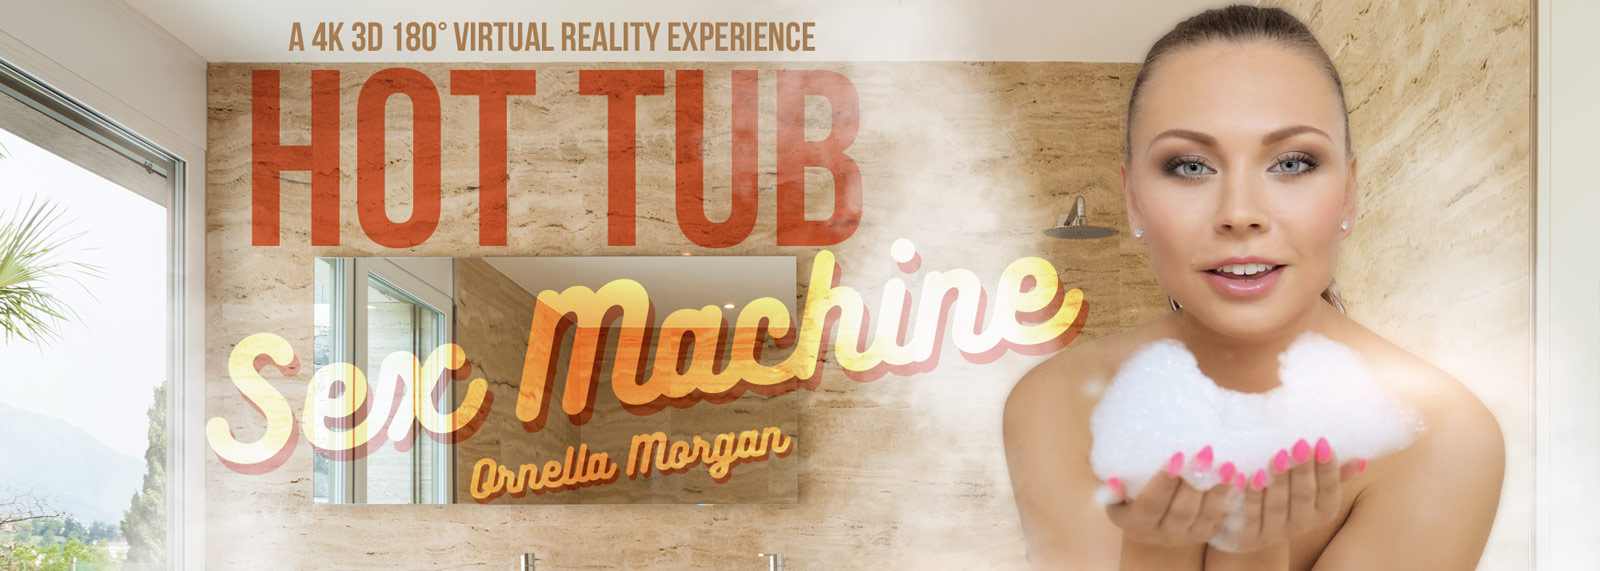 Hot Tub Sex Machine - VR Porn Video, Starring: Ornella Morgan